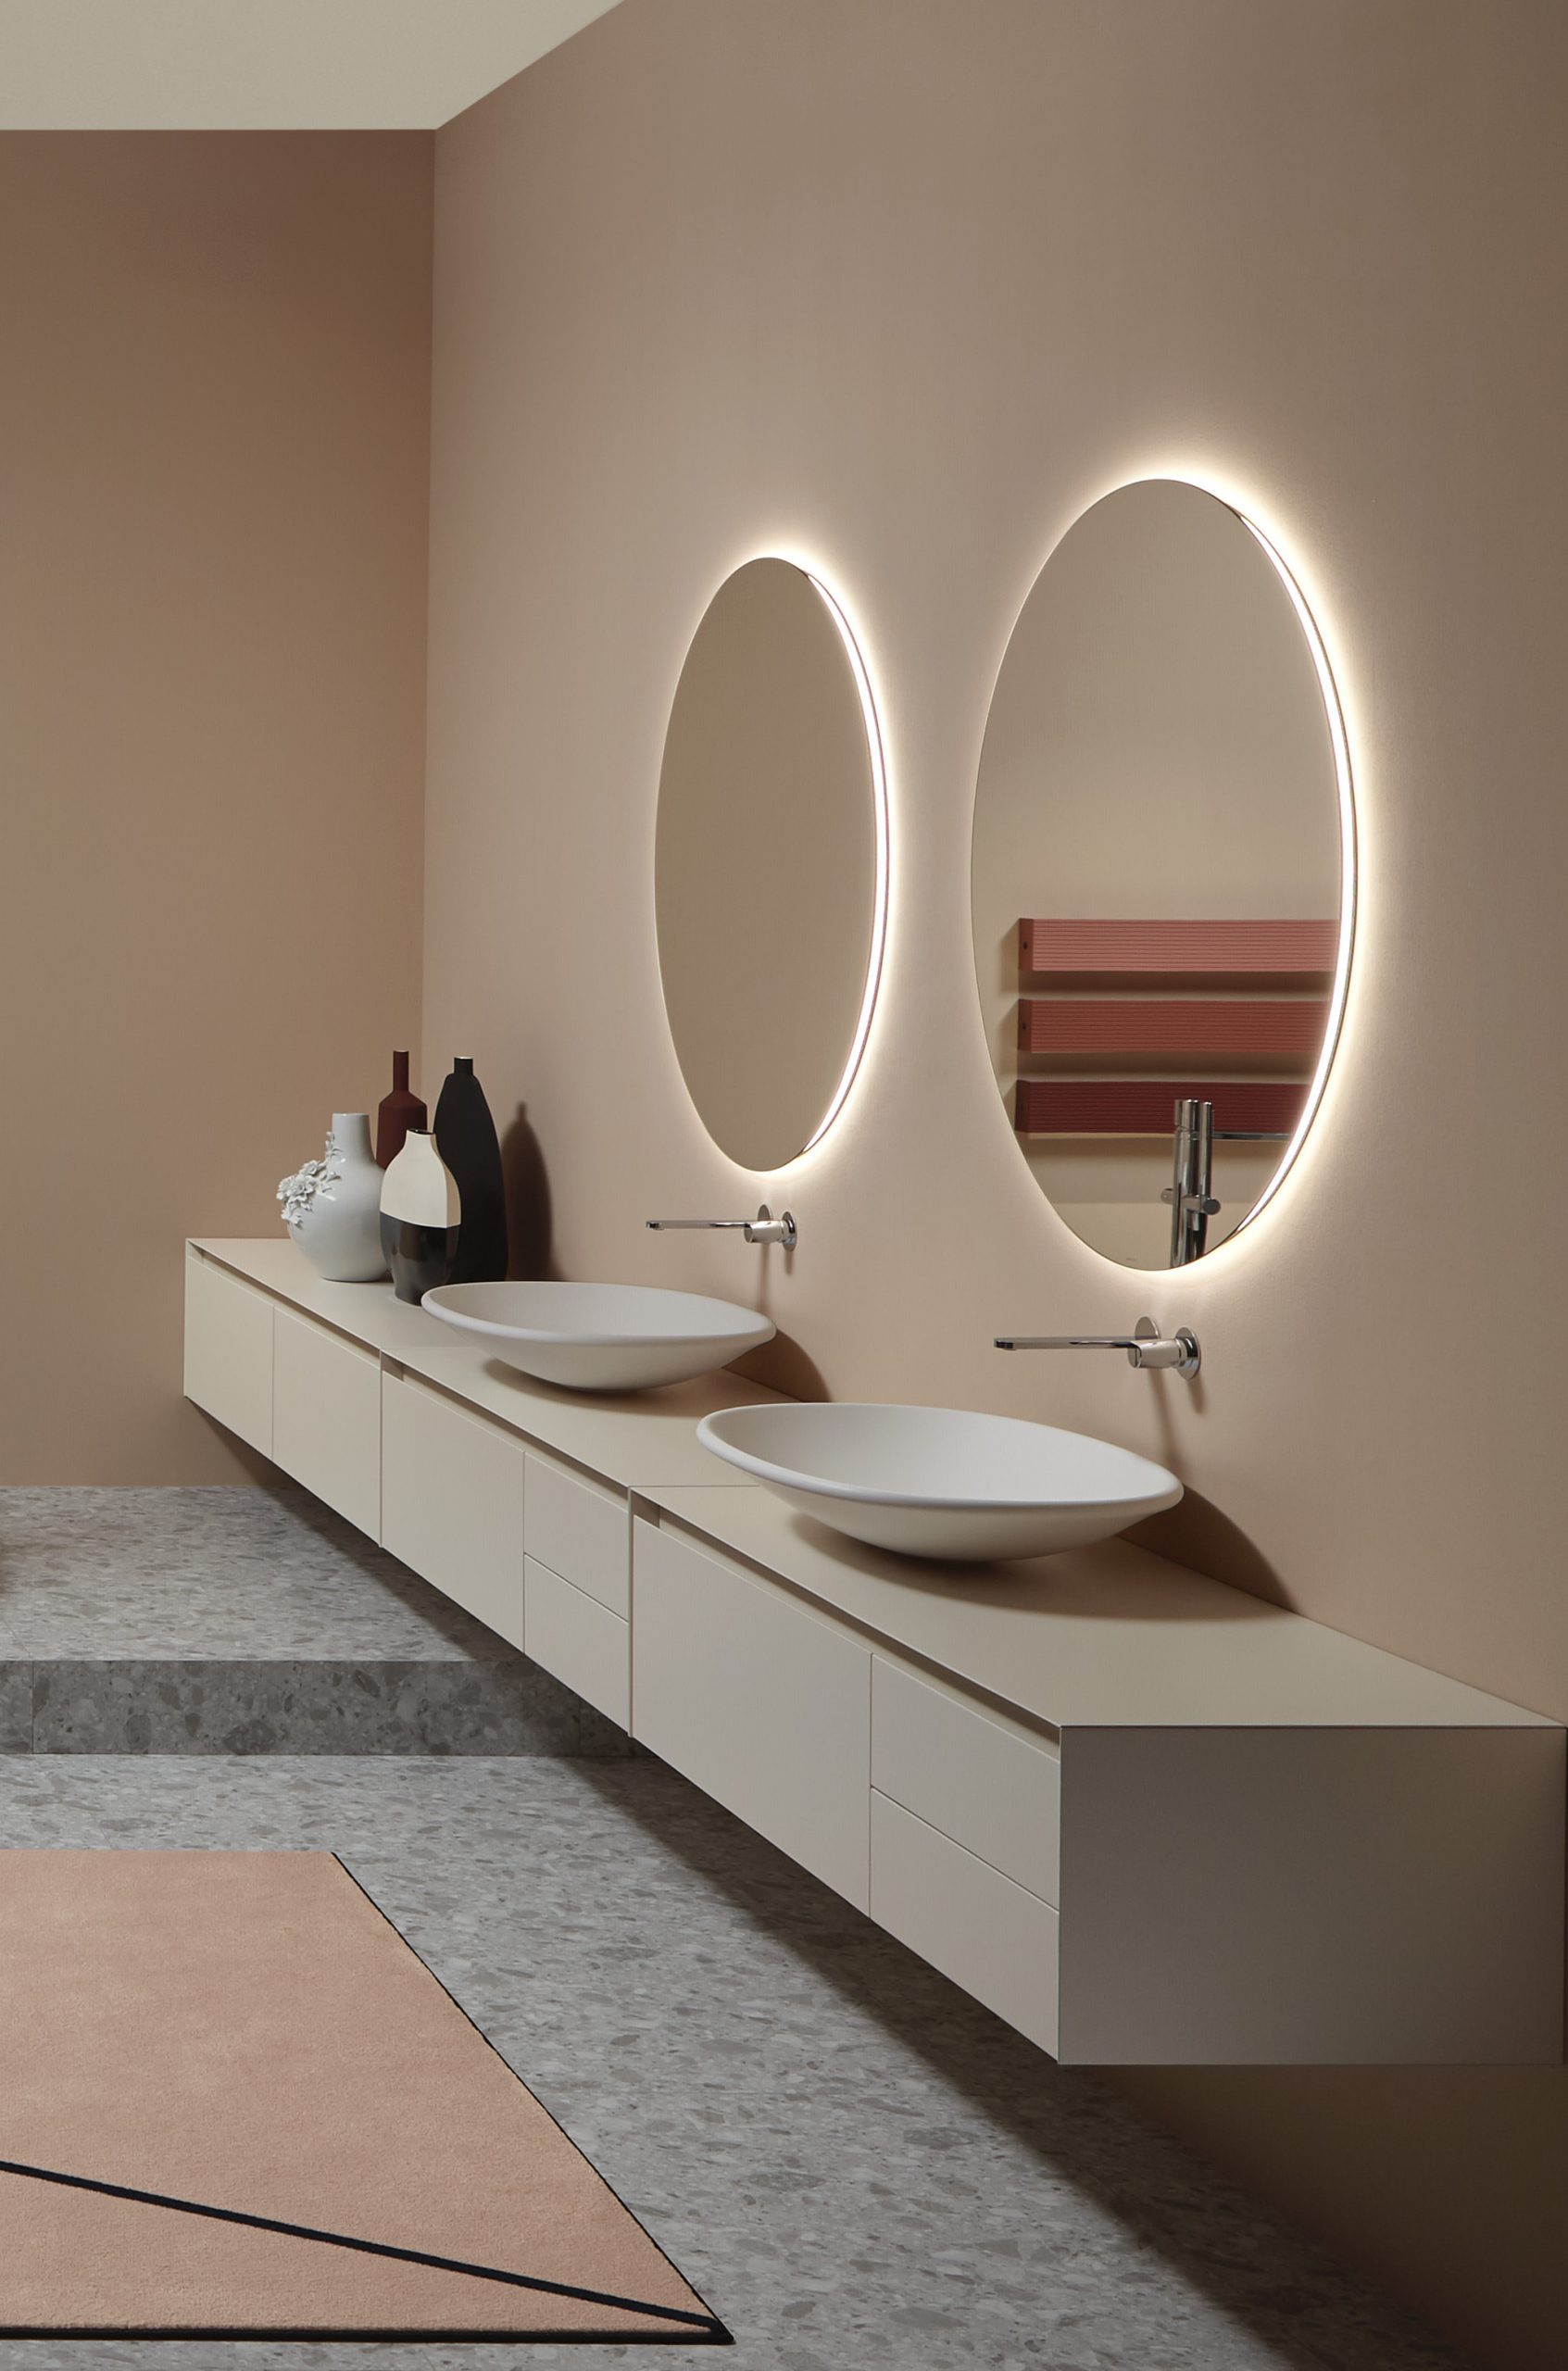 Interior with Rim washbasins by Debiasi Sandri